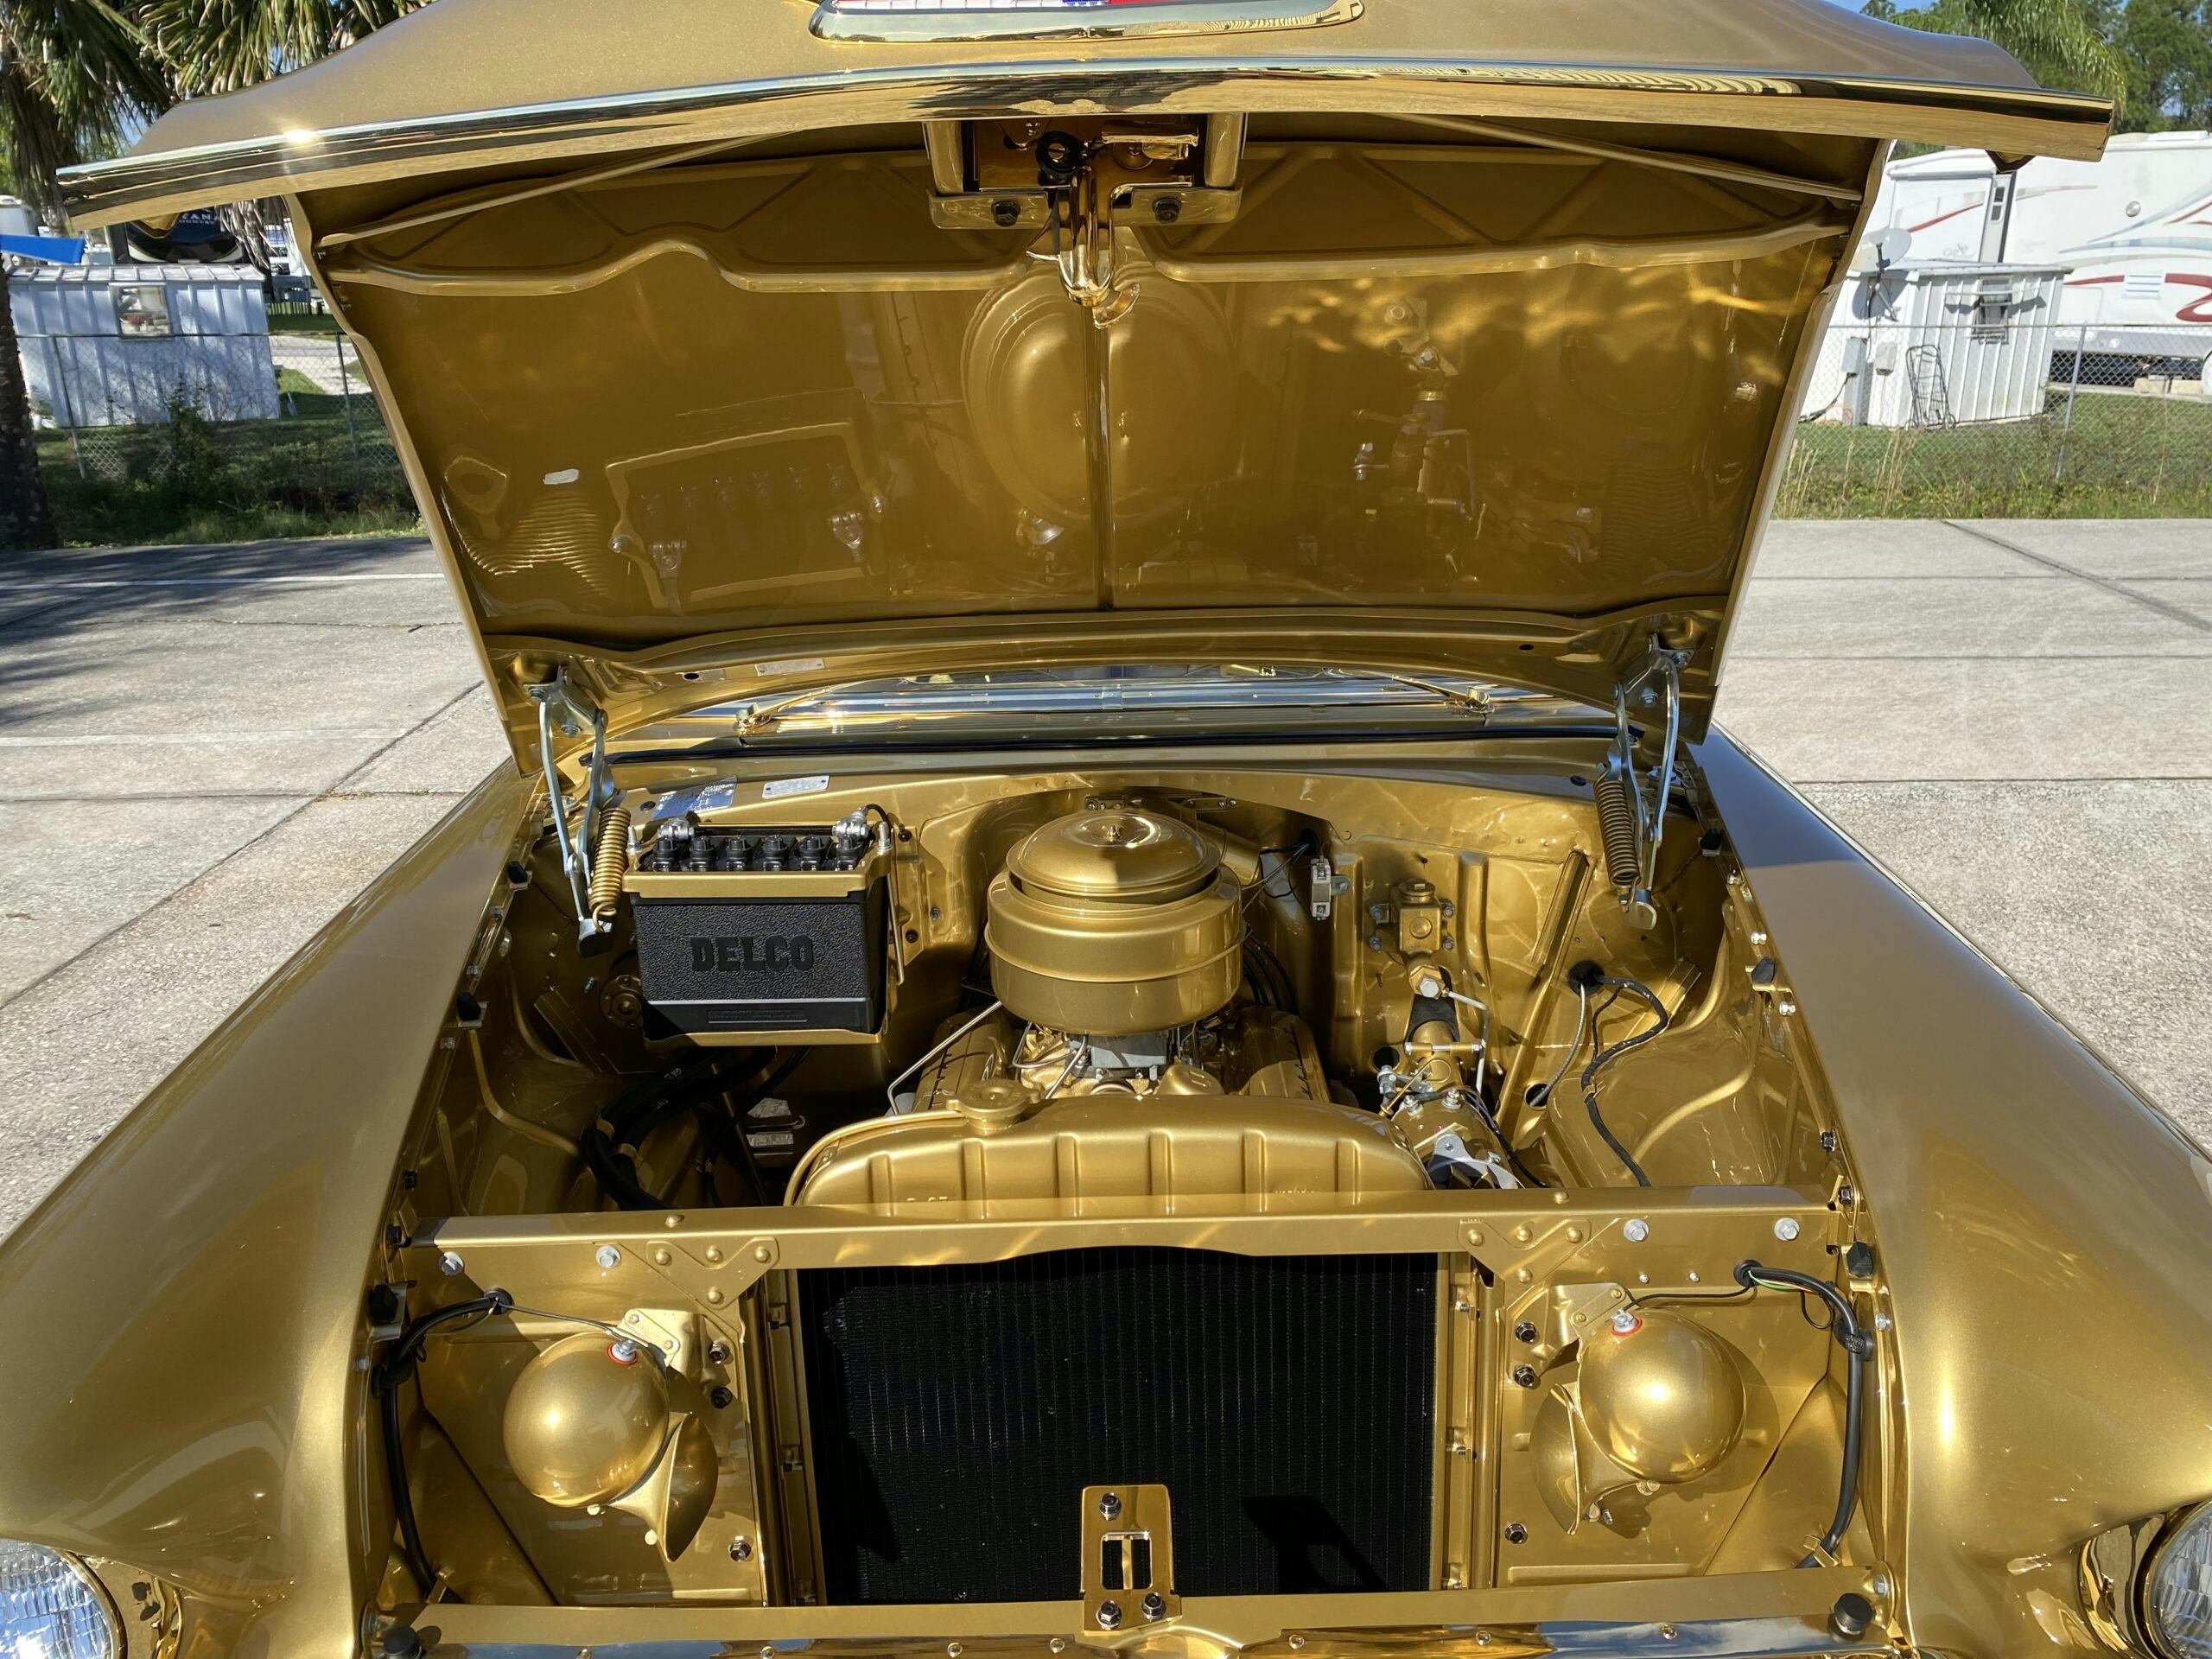 Gold-painted 1955 Chevy Bel Air two-door hardtop engine bay